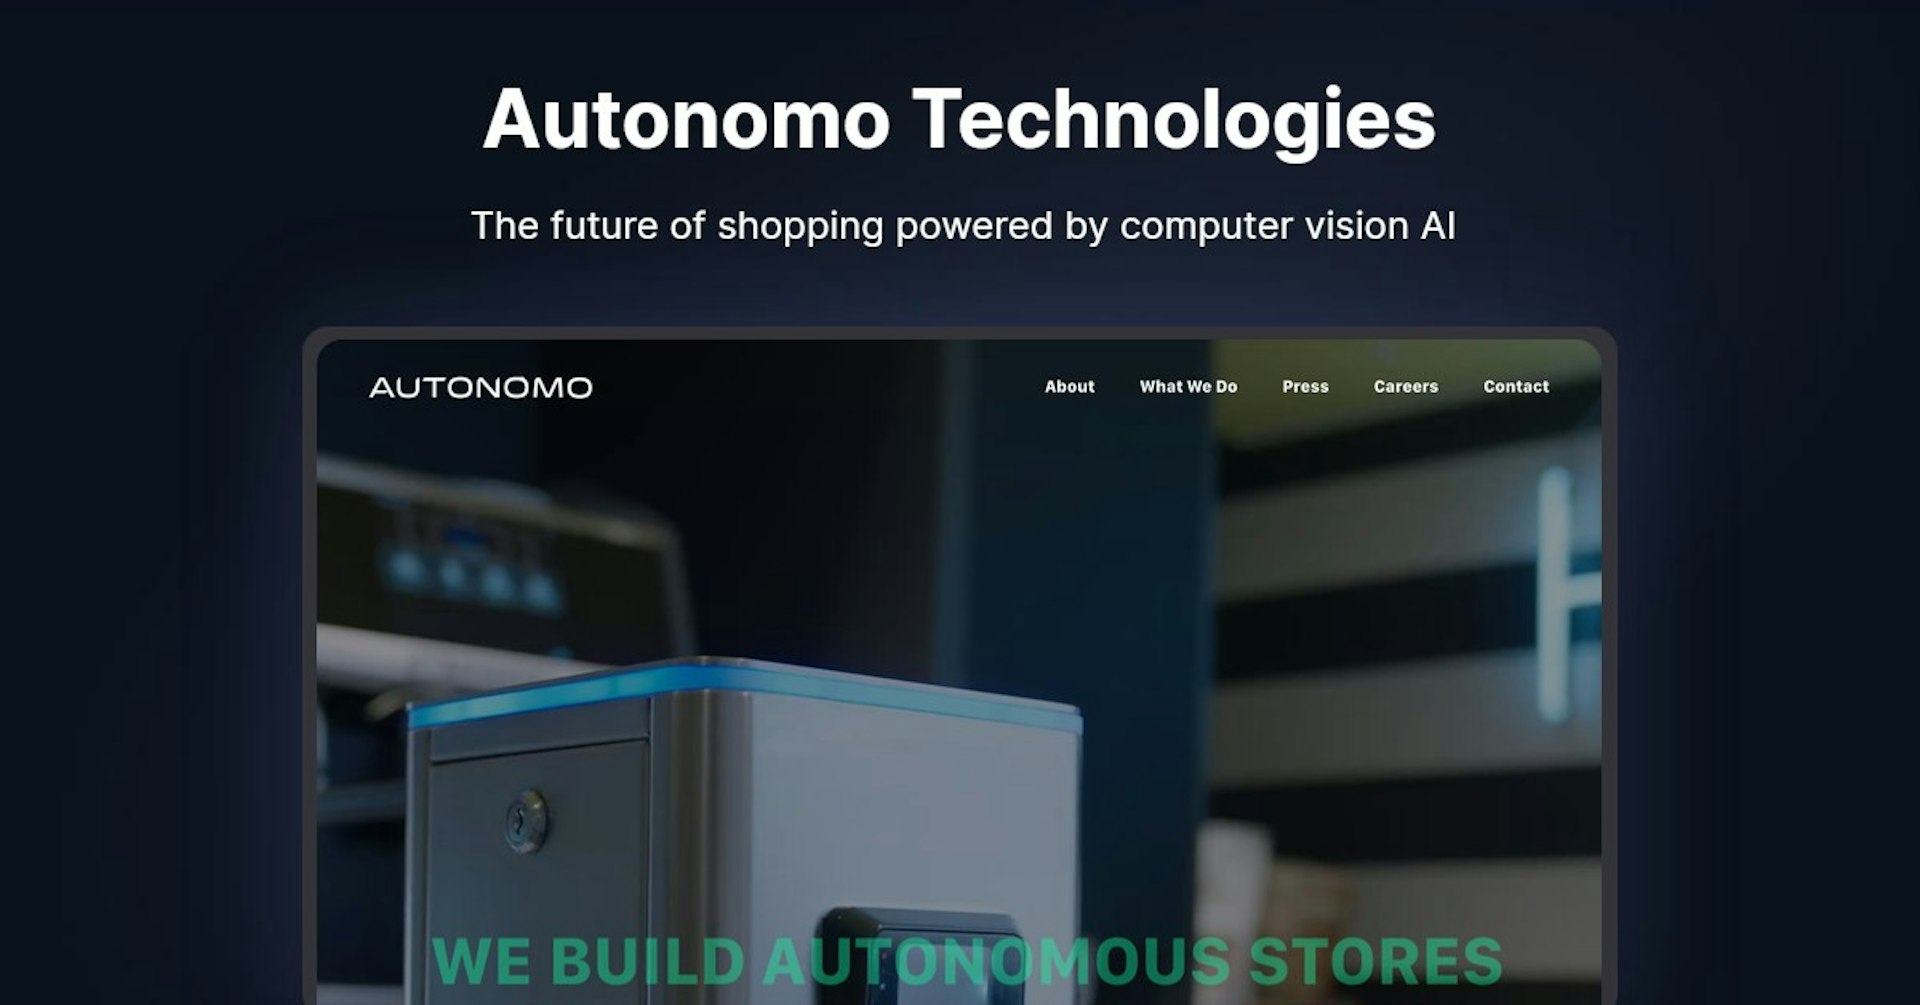 Autonomo Technologies